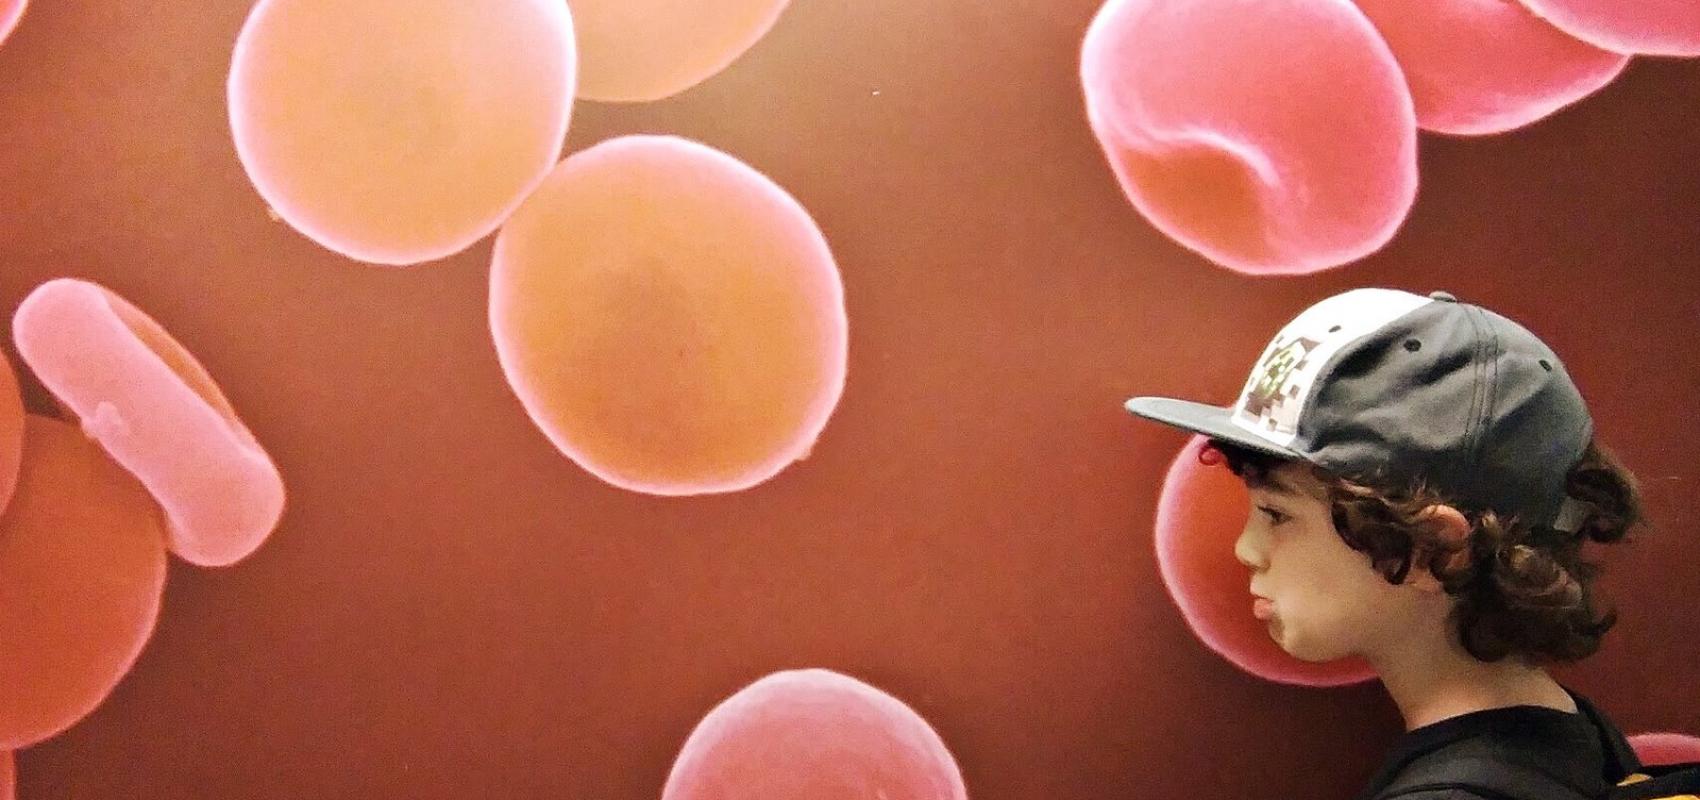 Red blood cells / Globules rouges -  - Jim Champion